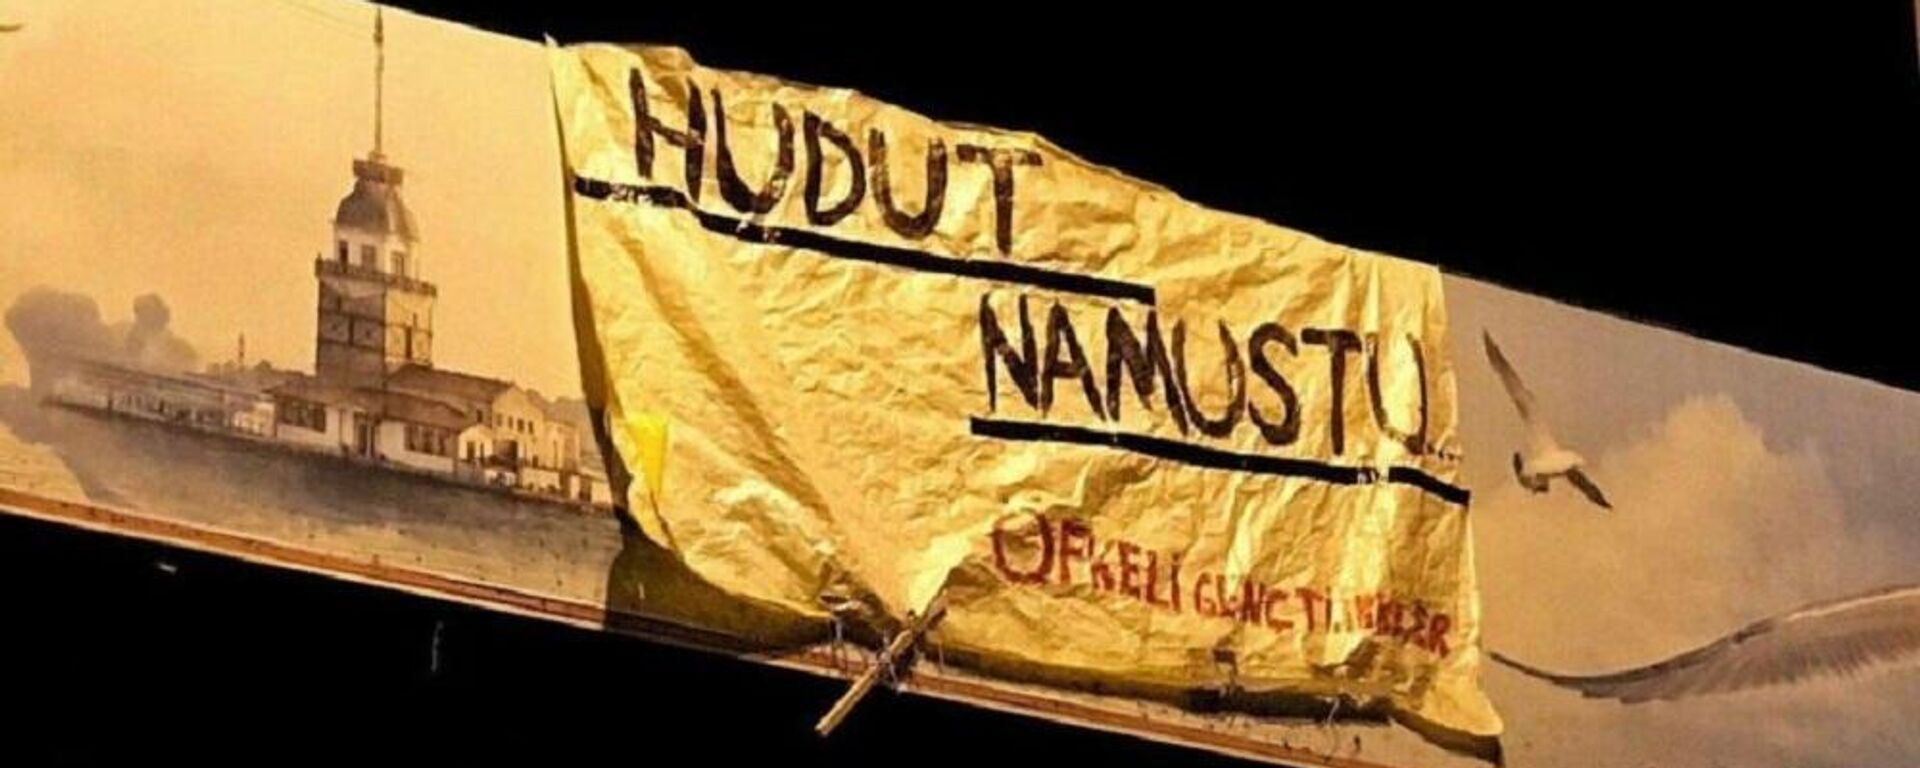 Hudut namustur pankart - Sputnik Türkiye, 1920, 21.08.2021